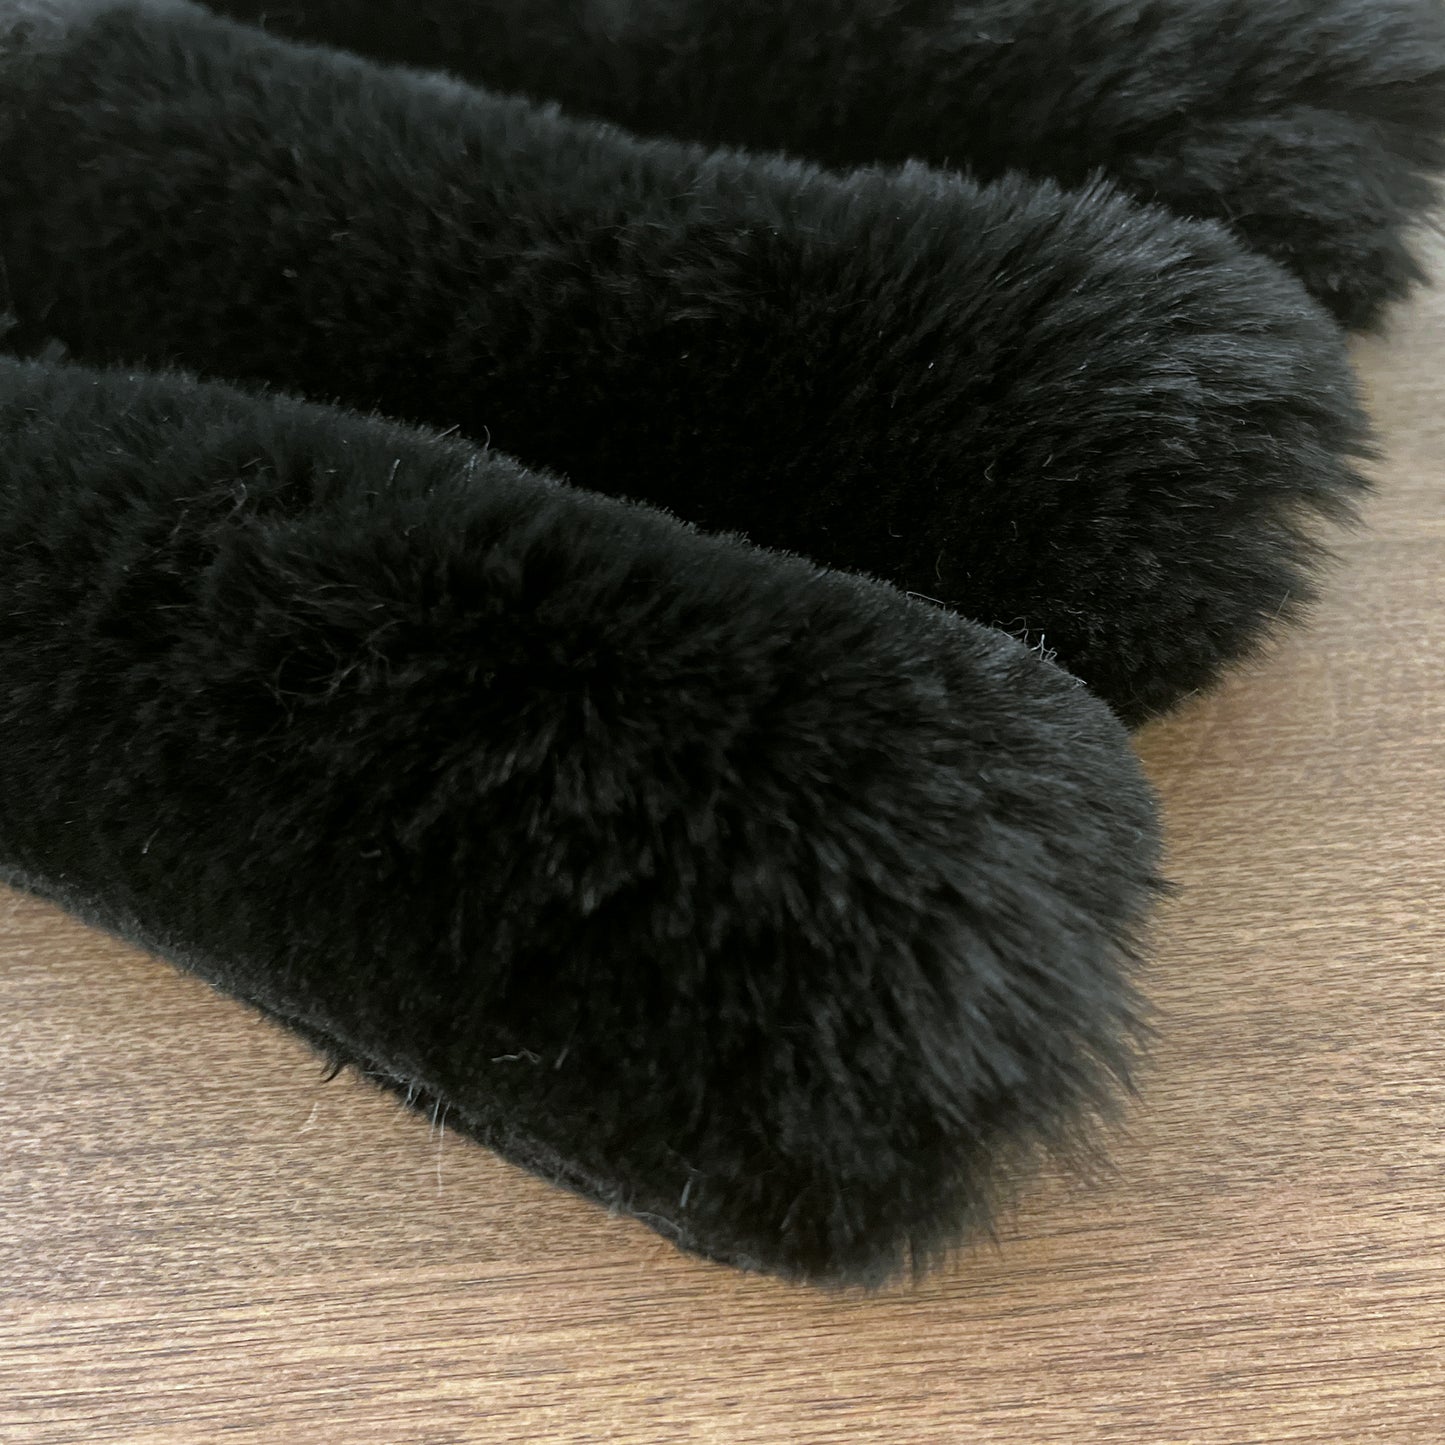 The Mood Puffy Faux Fur Throw, 50x60 in. Black